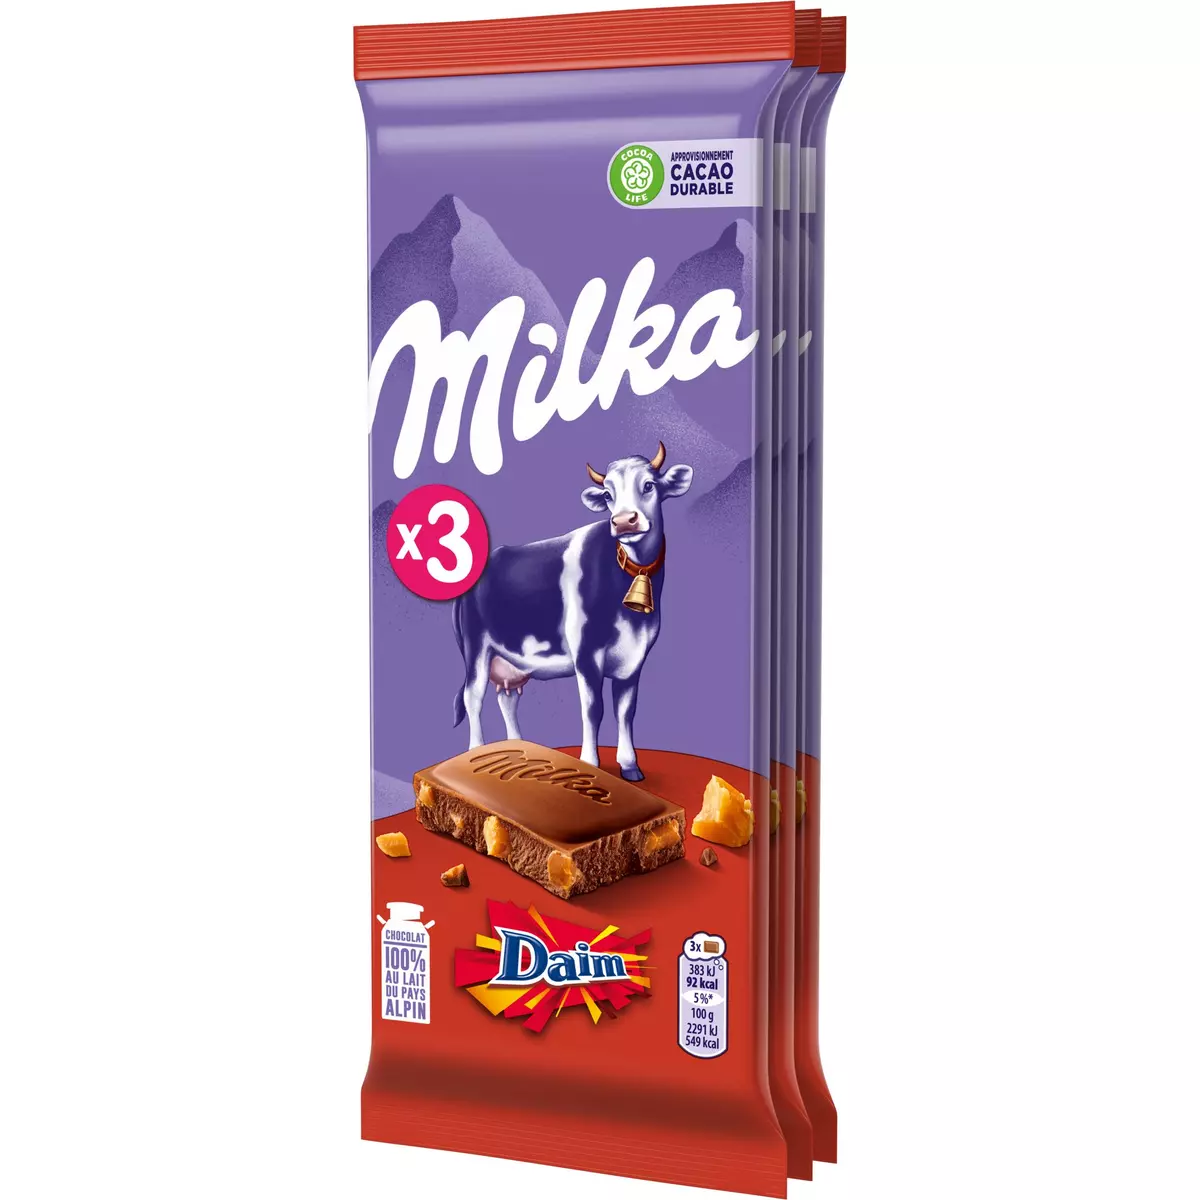 Tablette chocolat au lait daim Milka x3 - 100g